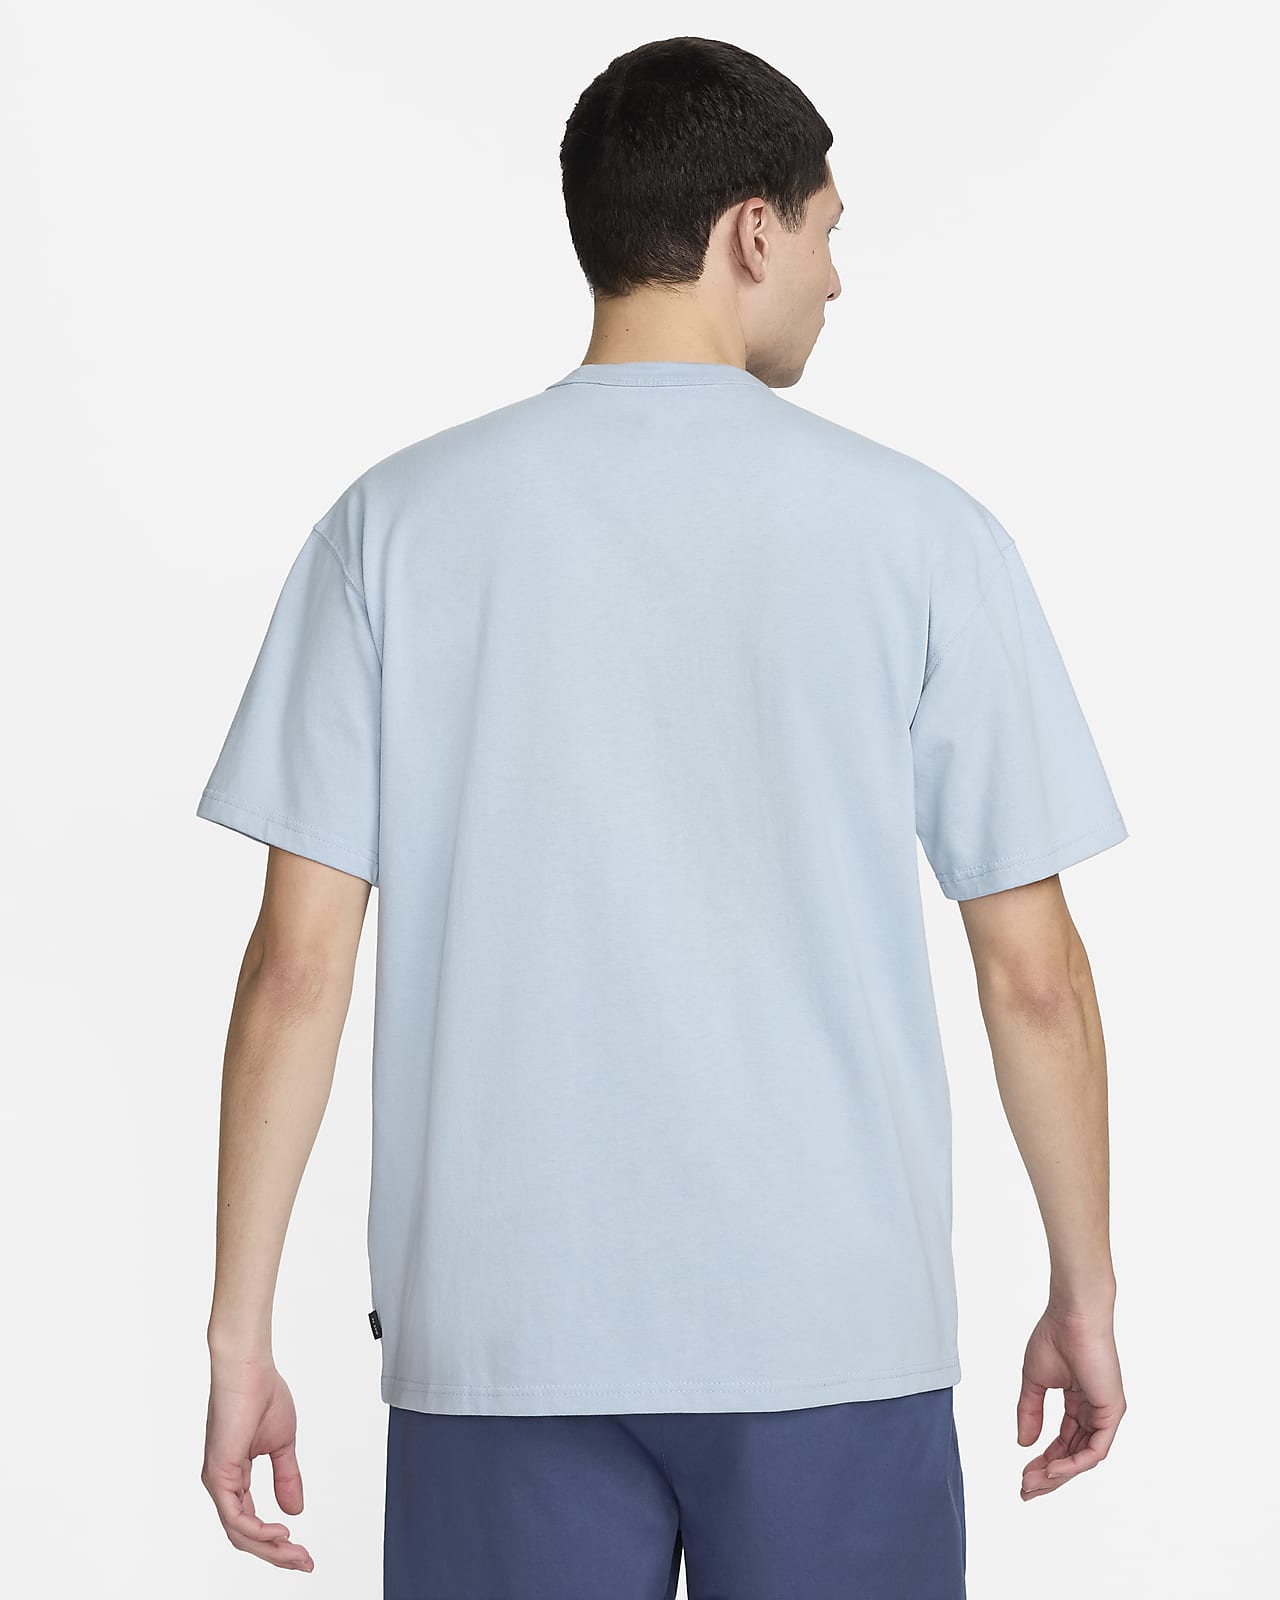 Nike Premium essentials logo t-shirt in grey with pocket